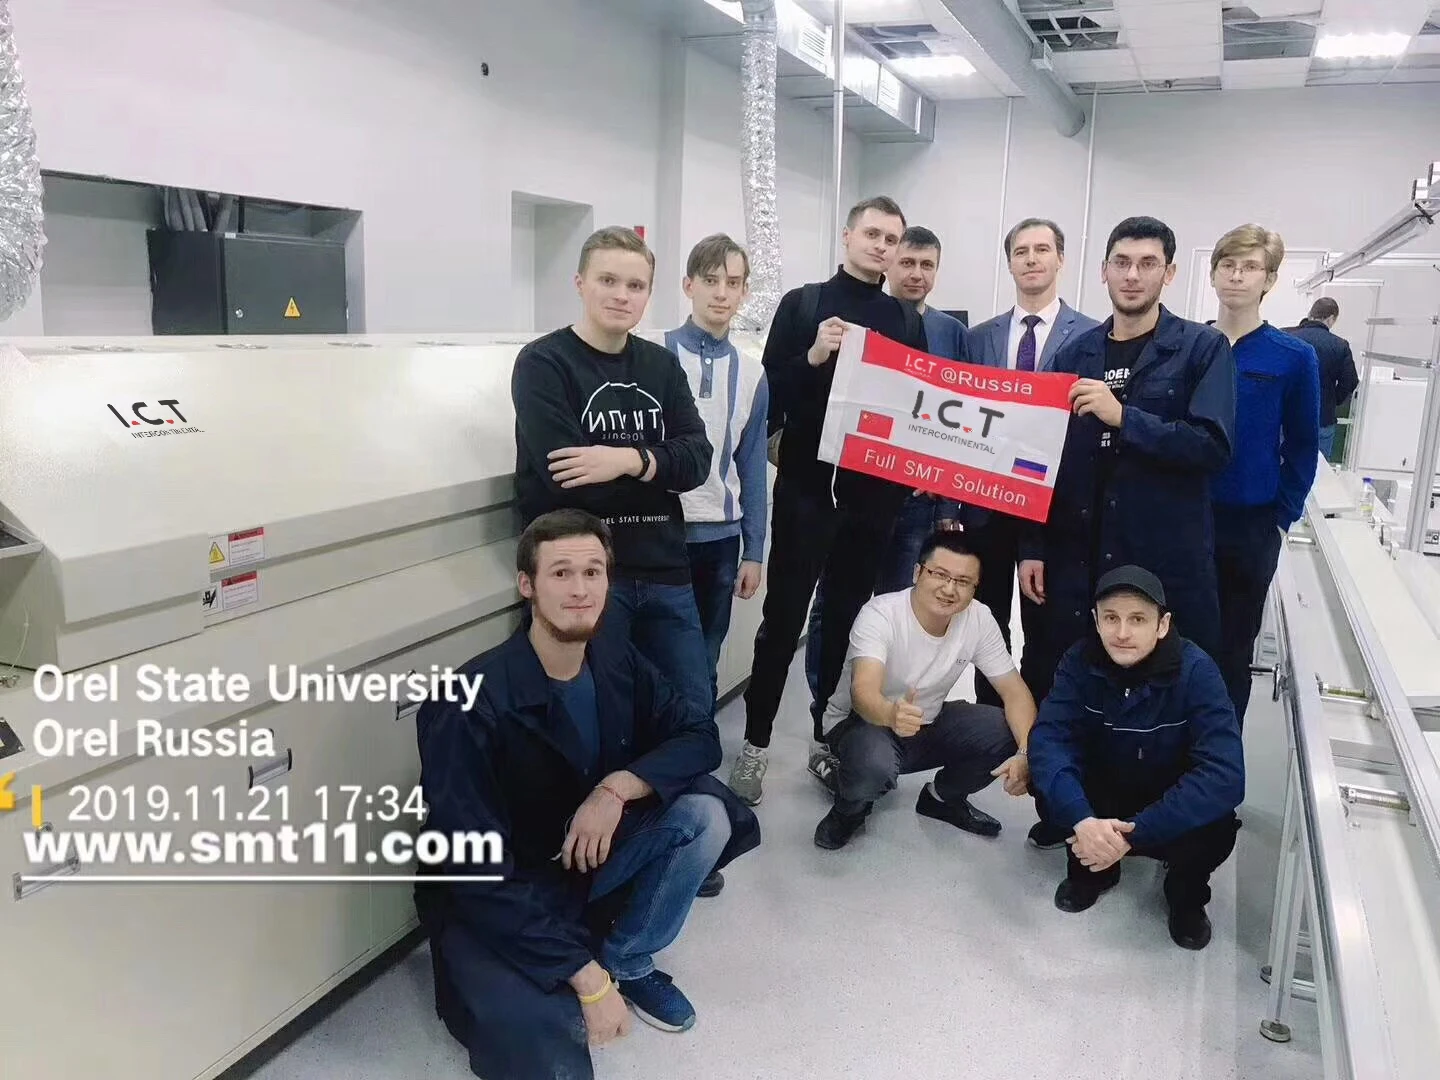 Russia (University) - Security Industry Customer